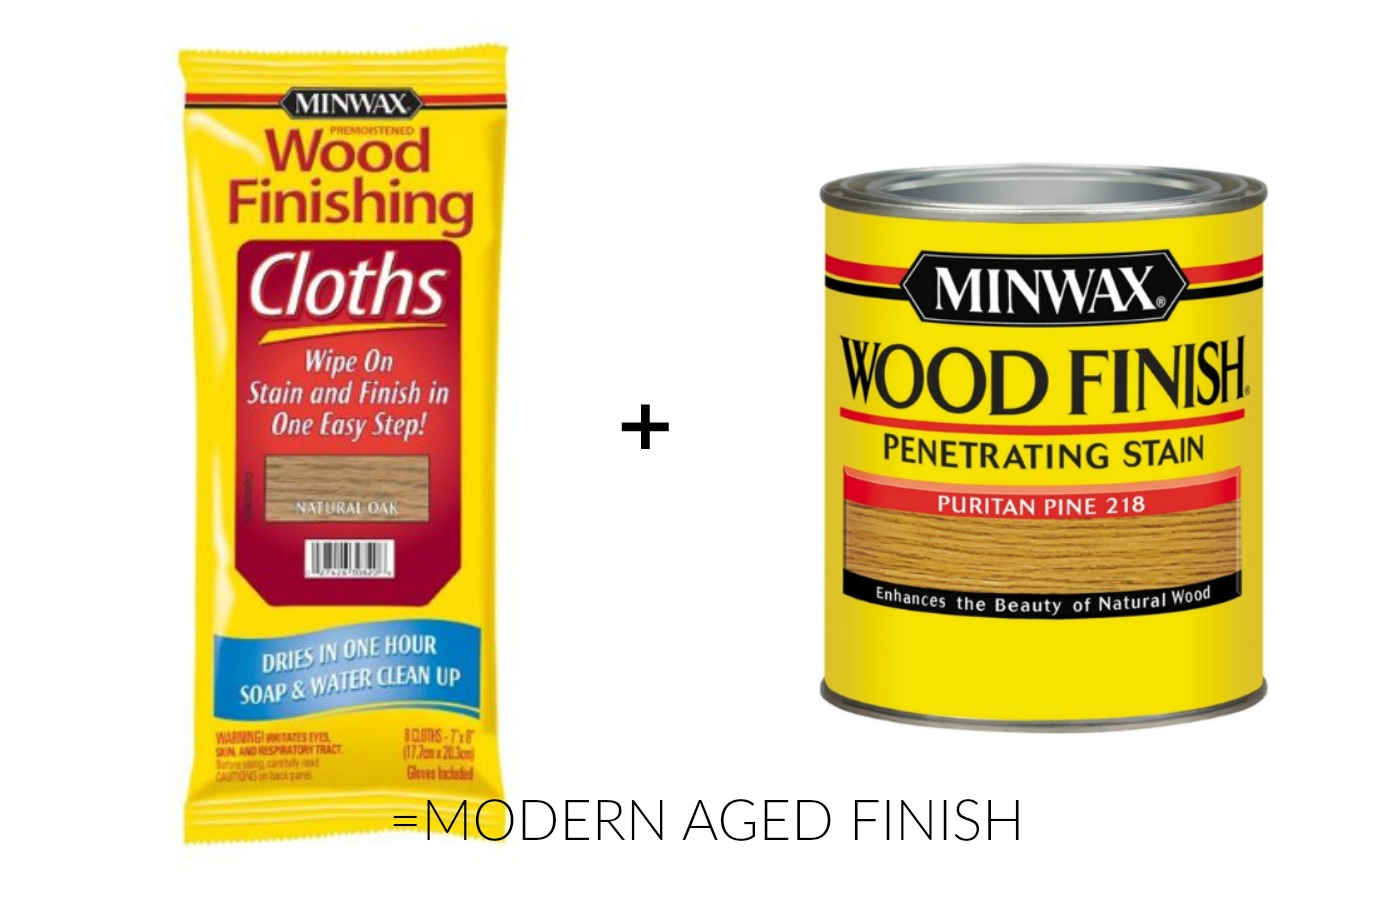 Modern-Finish-With-Minwax